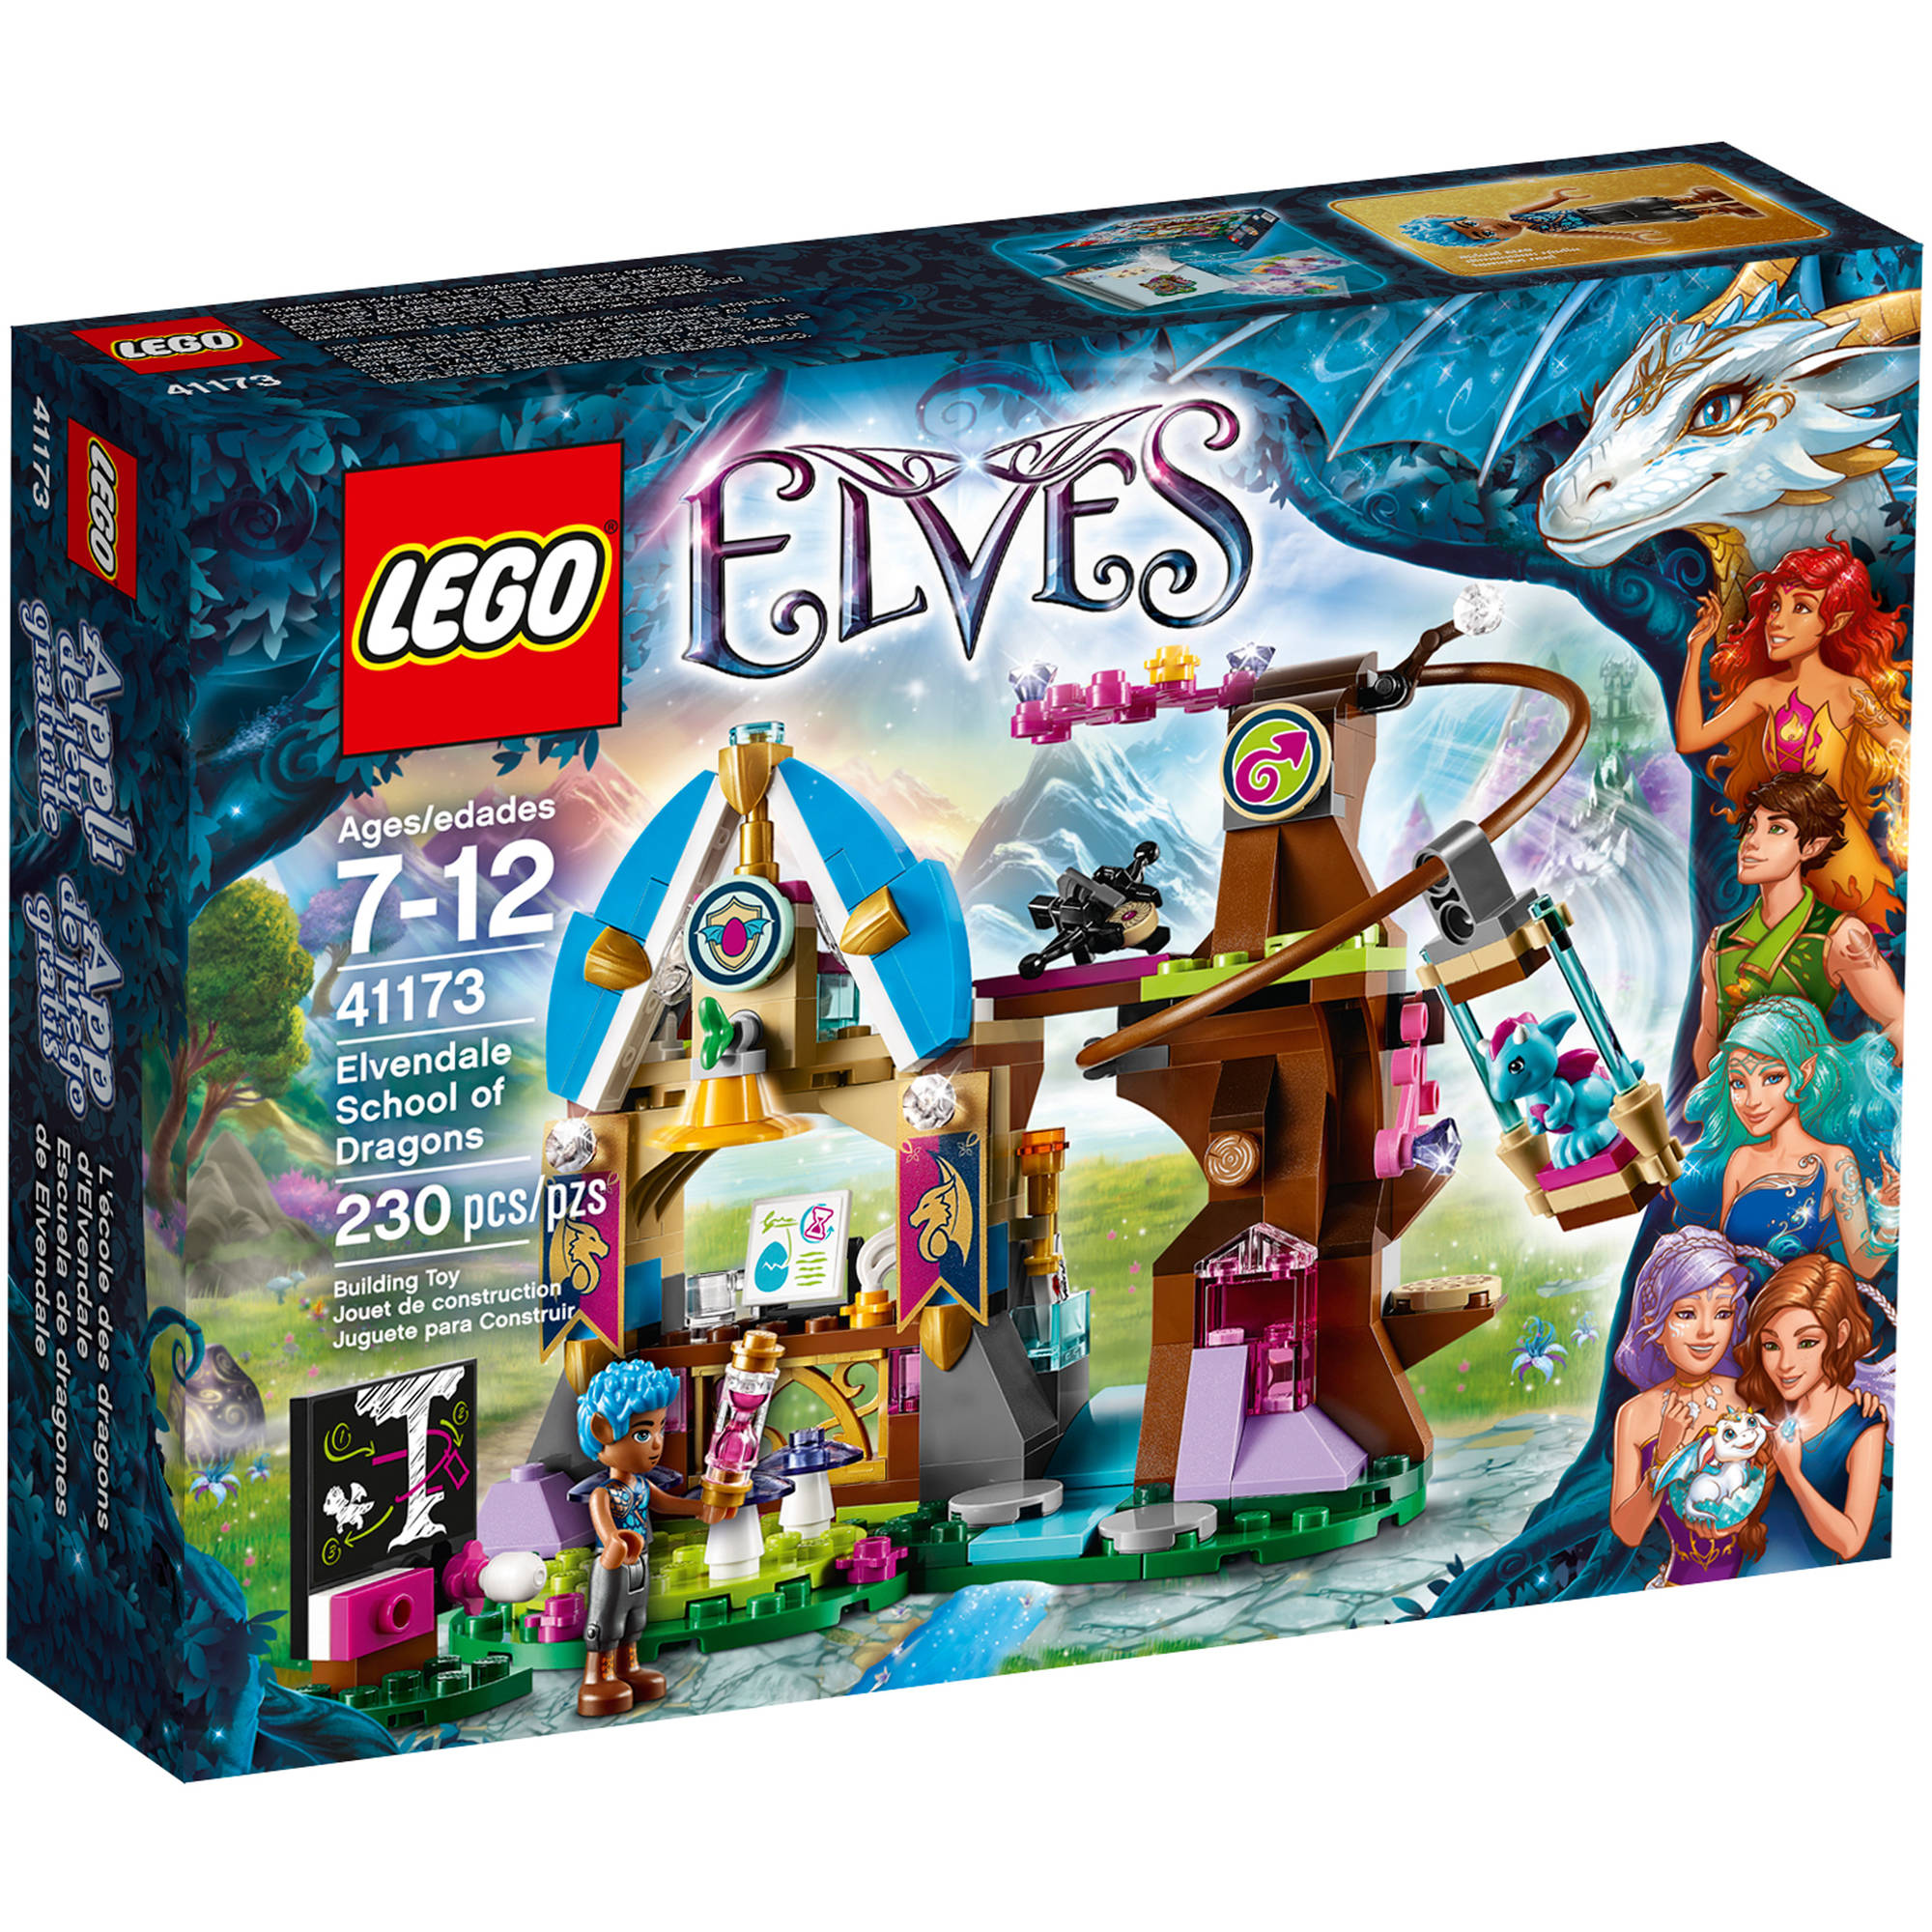 LEGO Elves Elvendale School of Dragons, 41173 - image 1 of 6